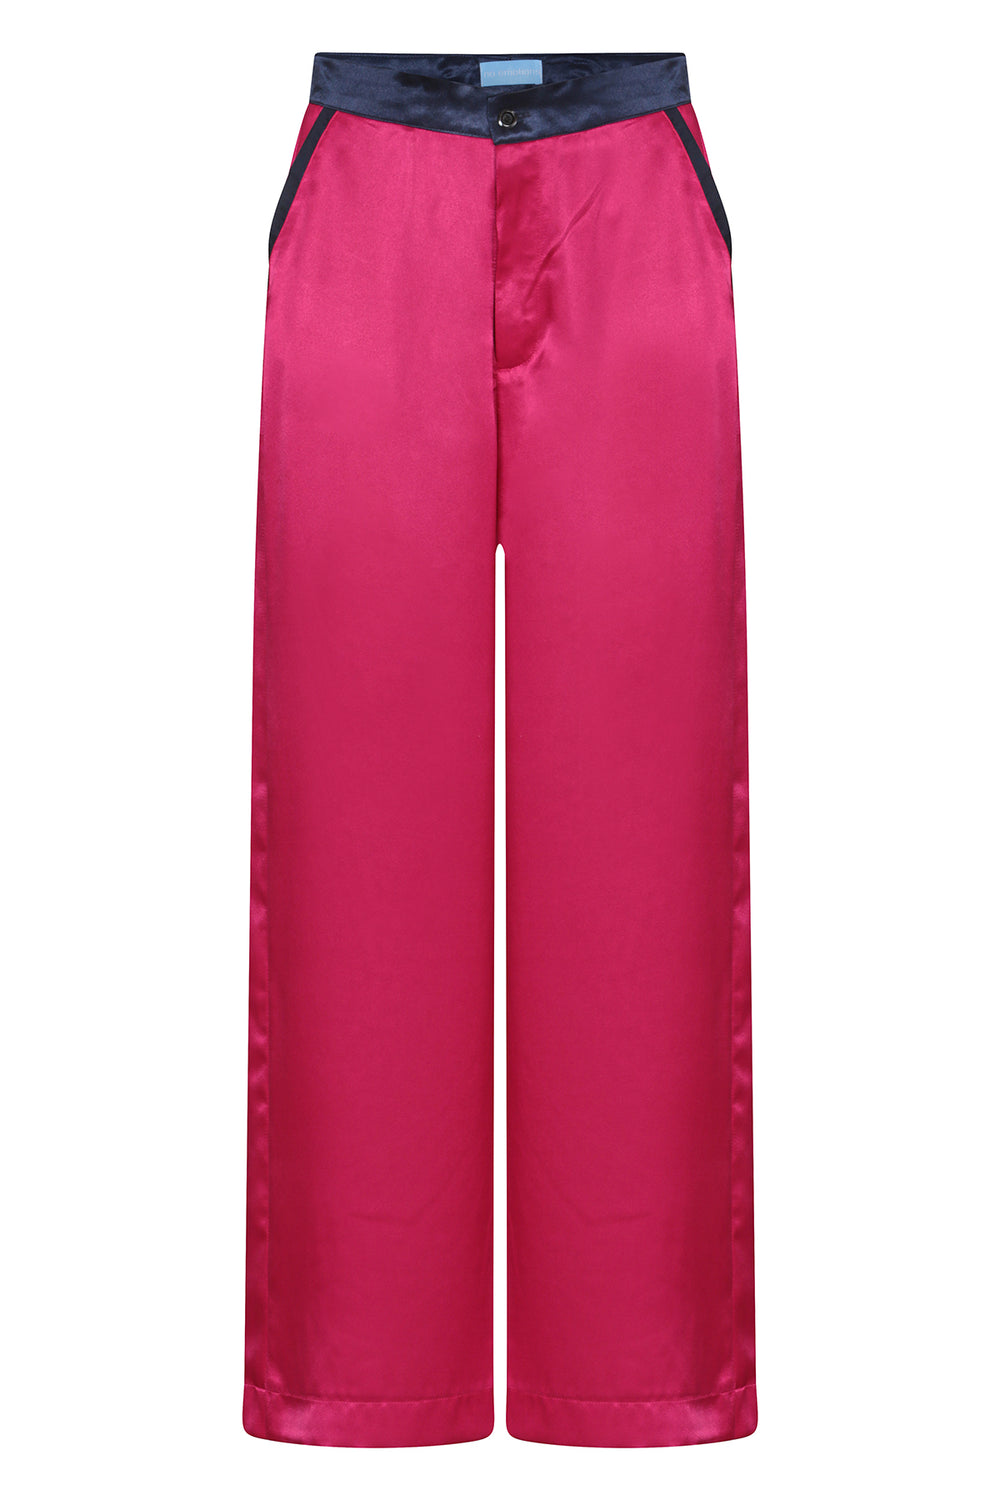 dark pink wide-leg silk trousers with navy trims, worn in London